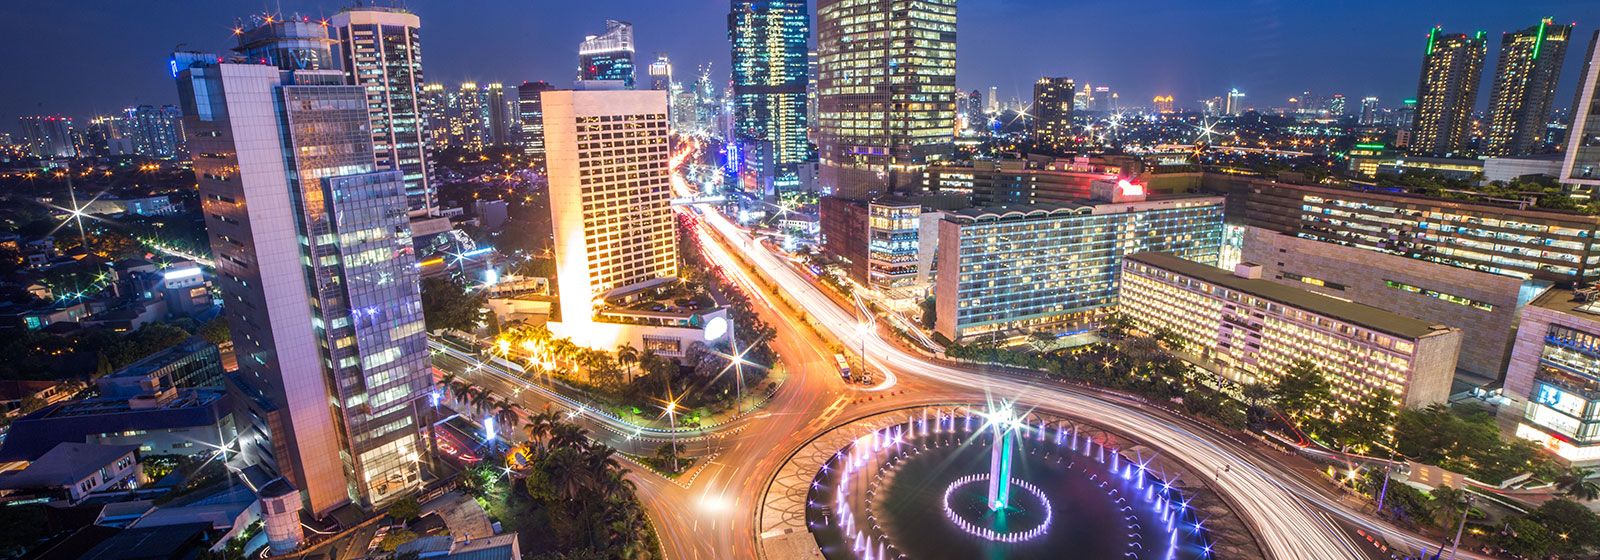 Jakarta cityscape lit up at night 